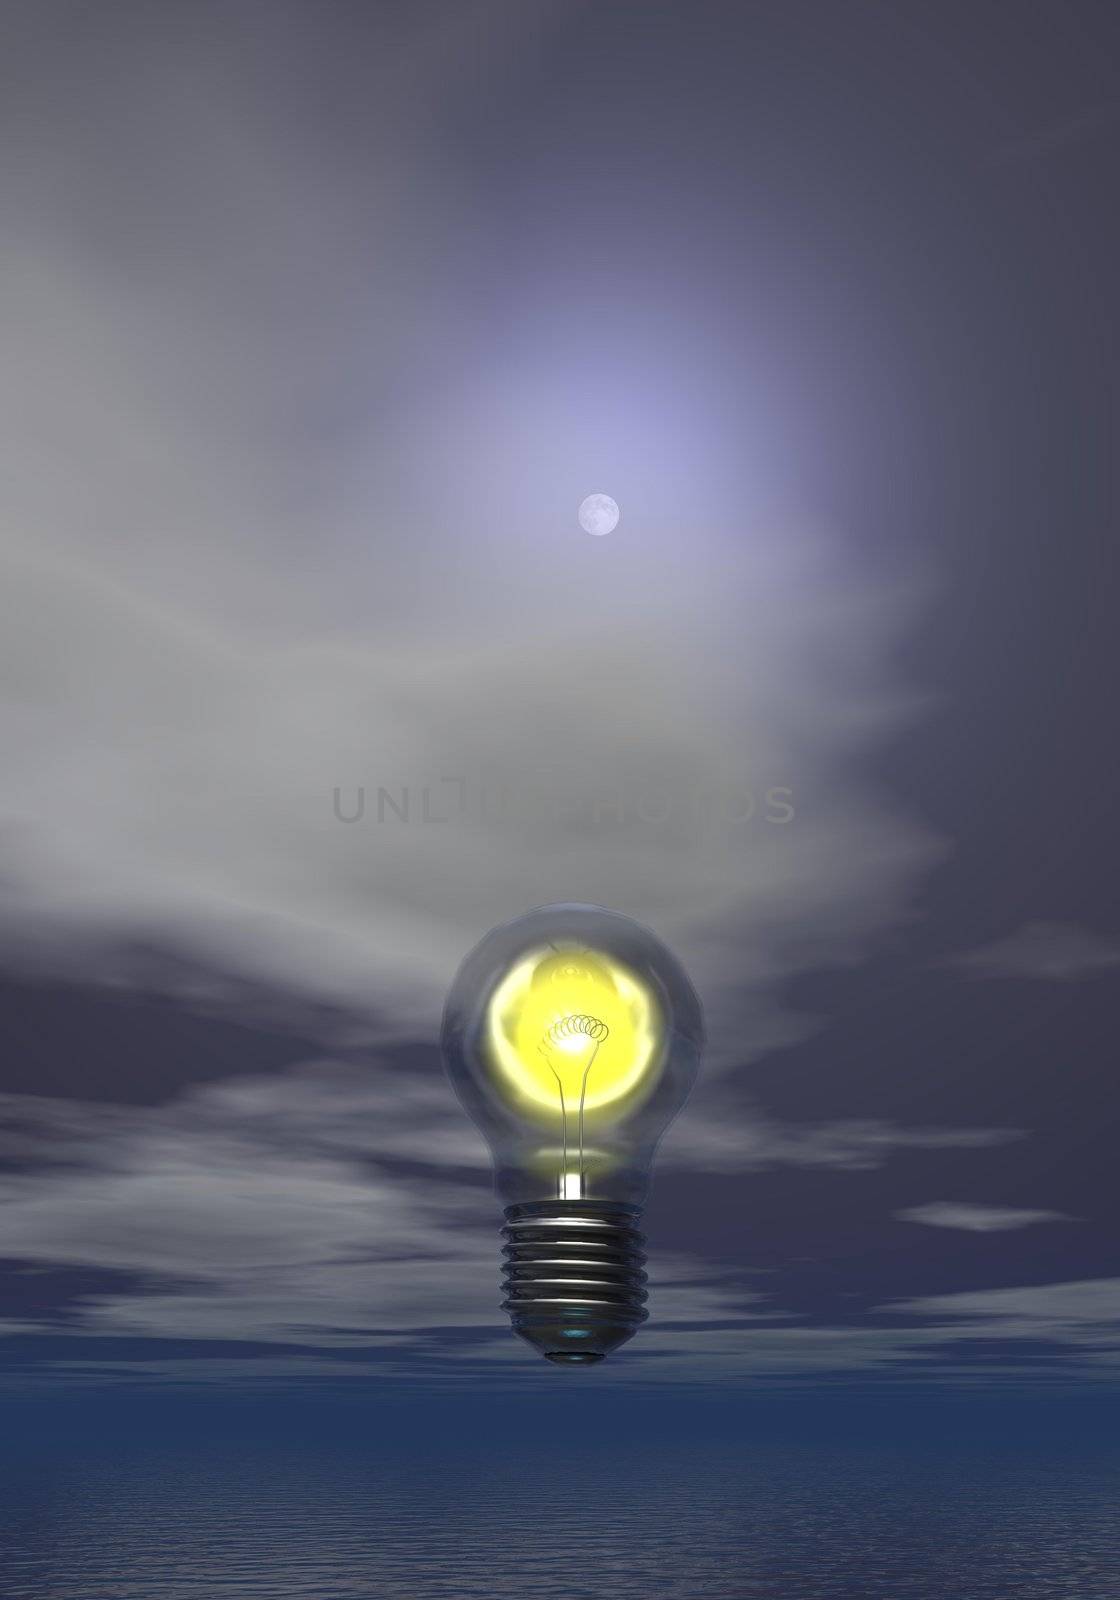 Light bulb by night by Elenaphotos21